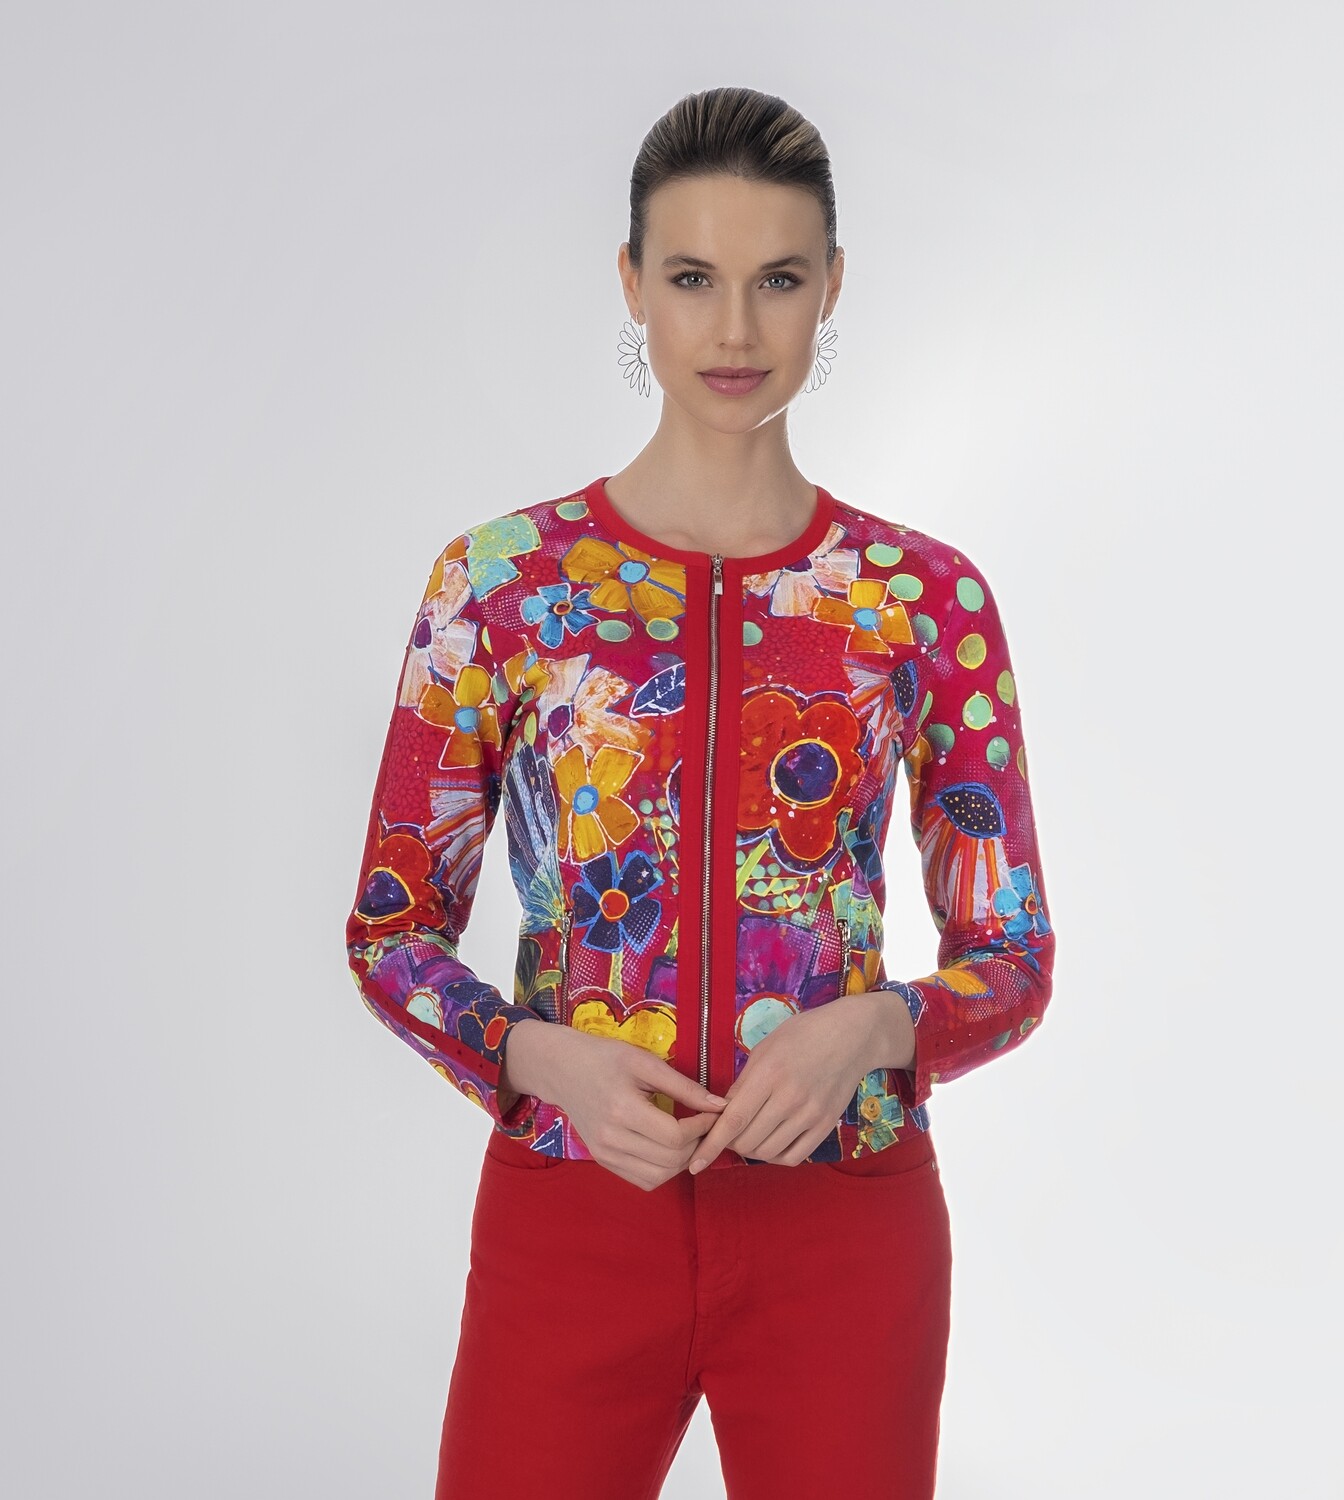 Simply Art: Fiesta Flowers Soft Denim Zip Up Abstract Art Jacket SOLD OUT